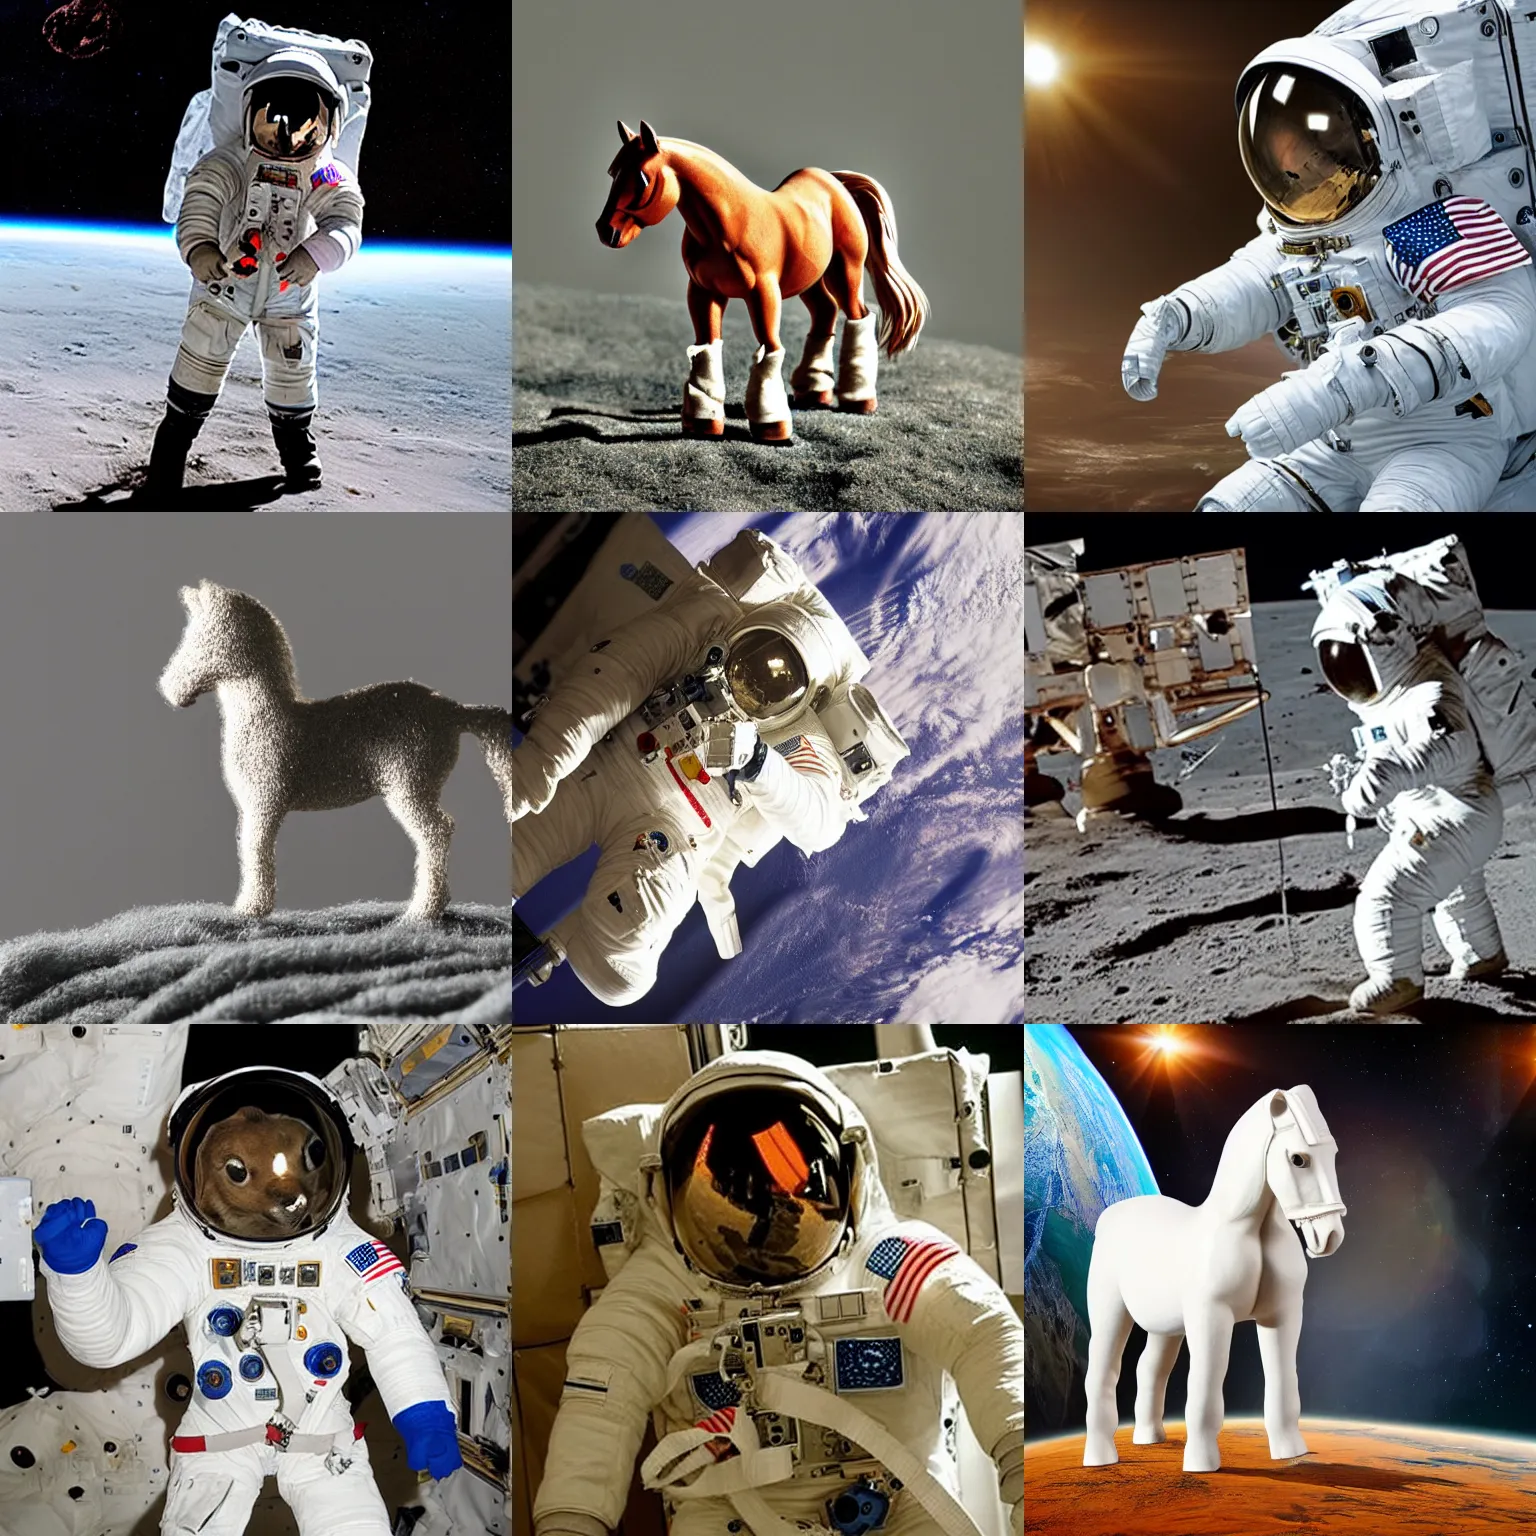 Prompt: little horse standing on astronauts shoulder